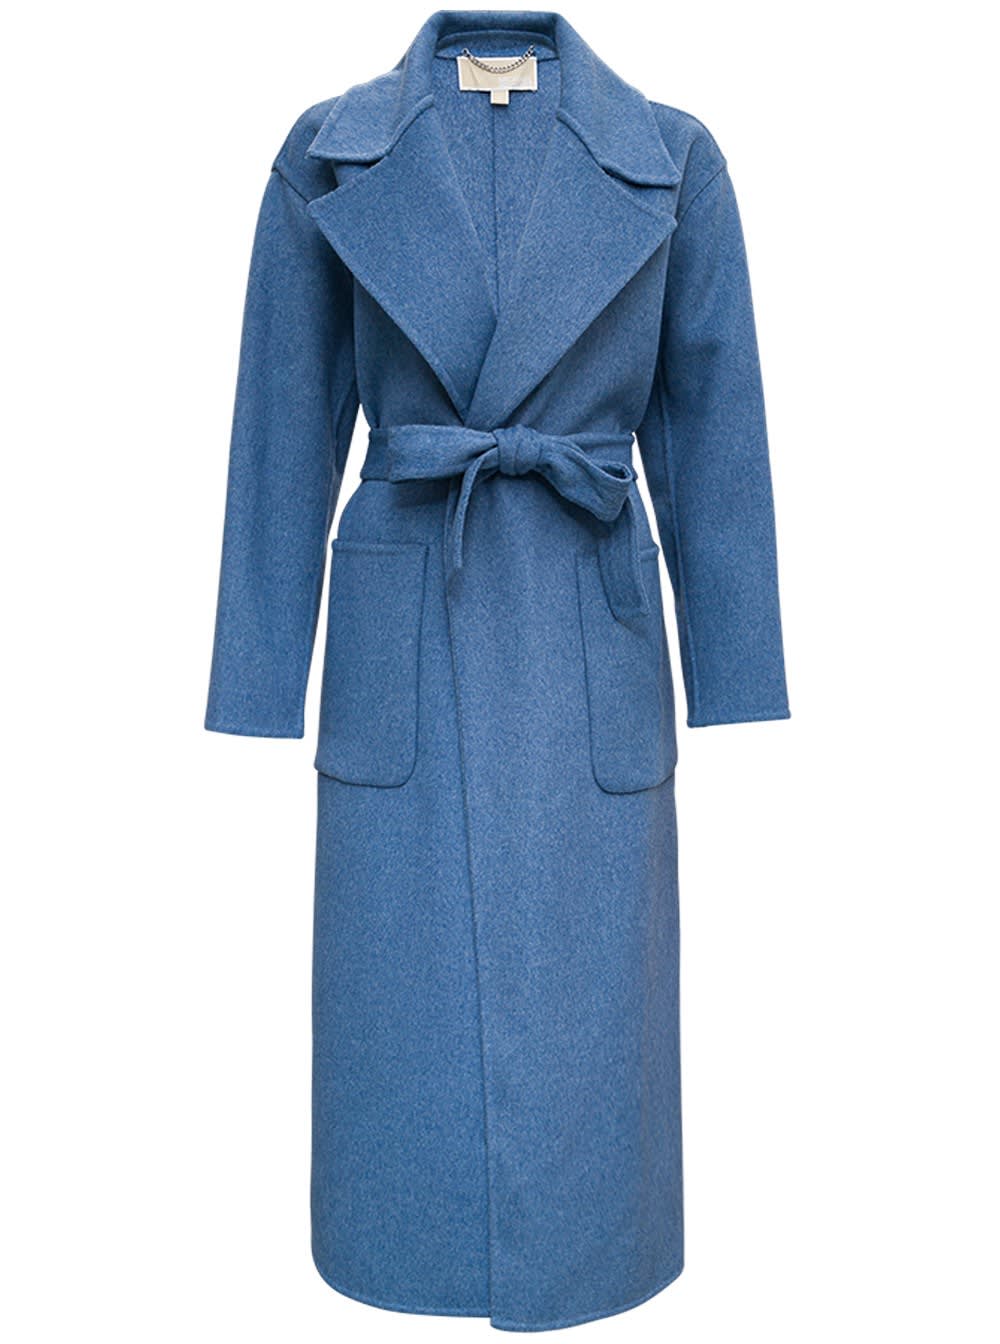 Michael Kors Blue Wool Coat With Belt